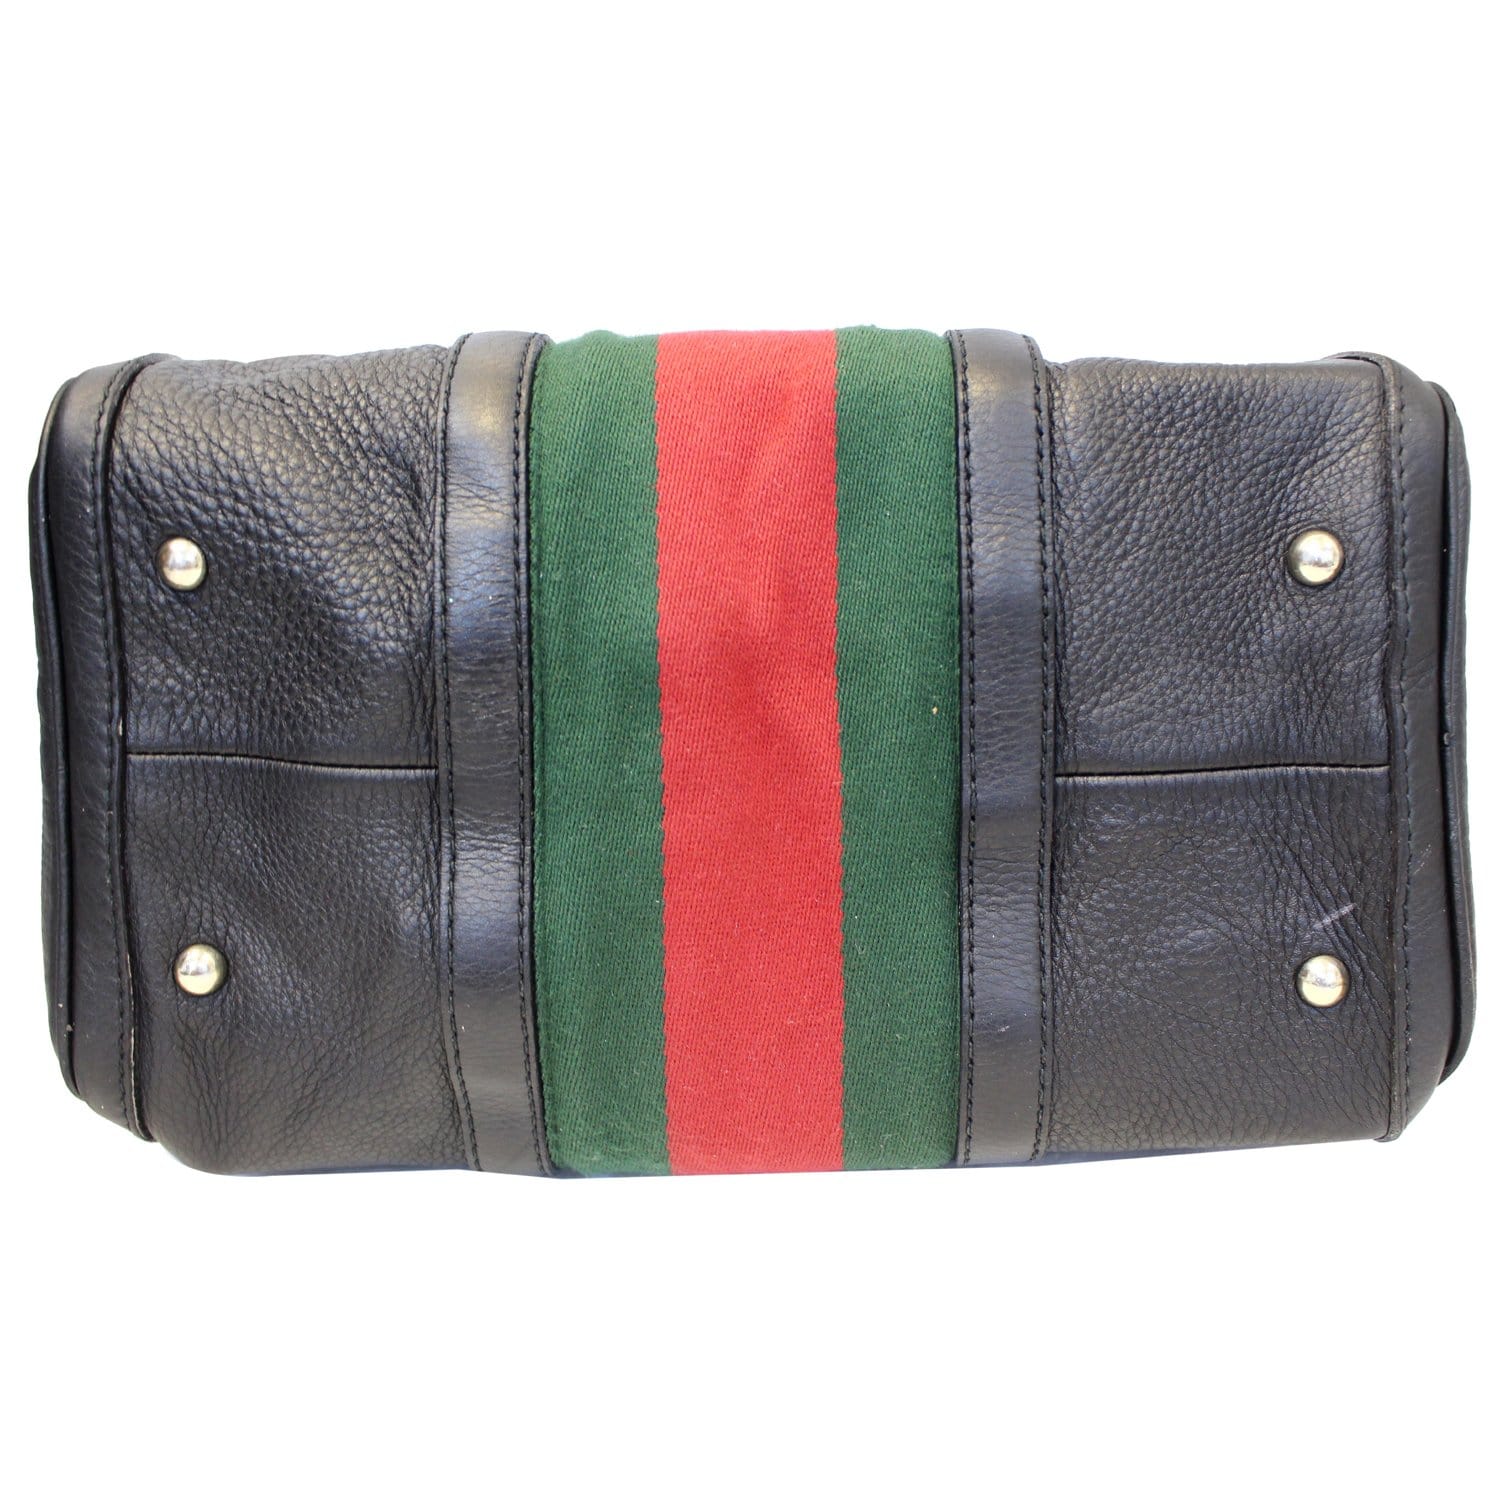 Gucci Vintage Web Medium Boston Bag, Black/Red/Green